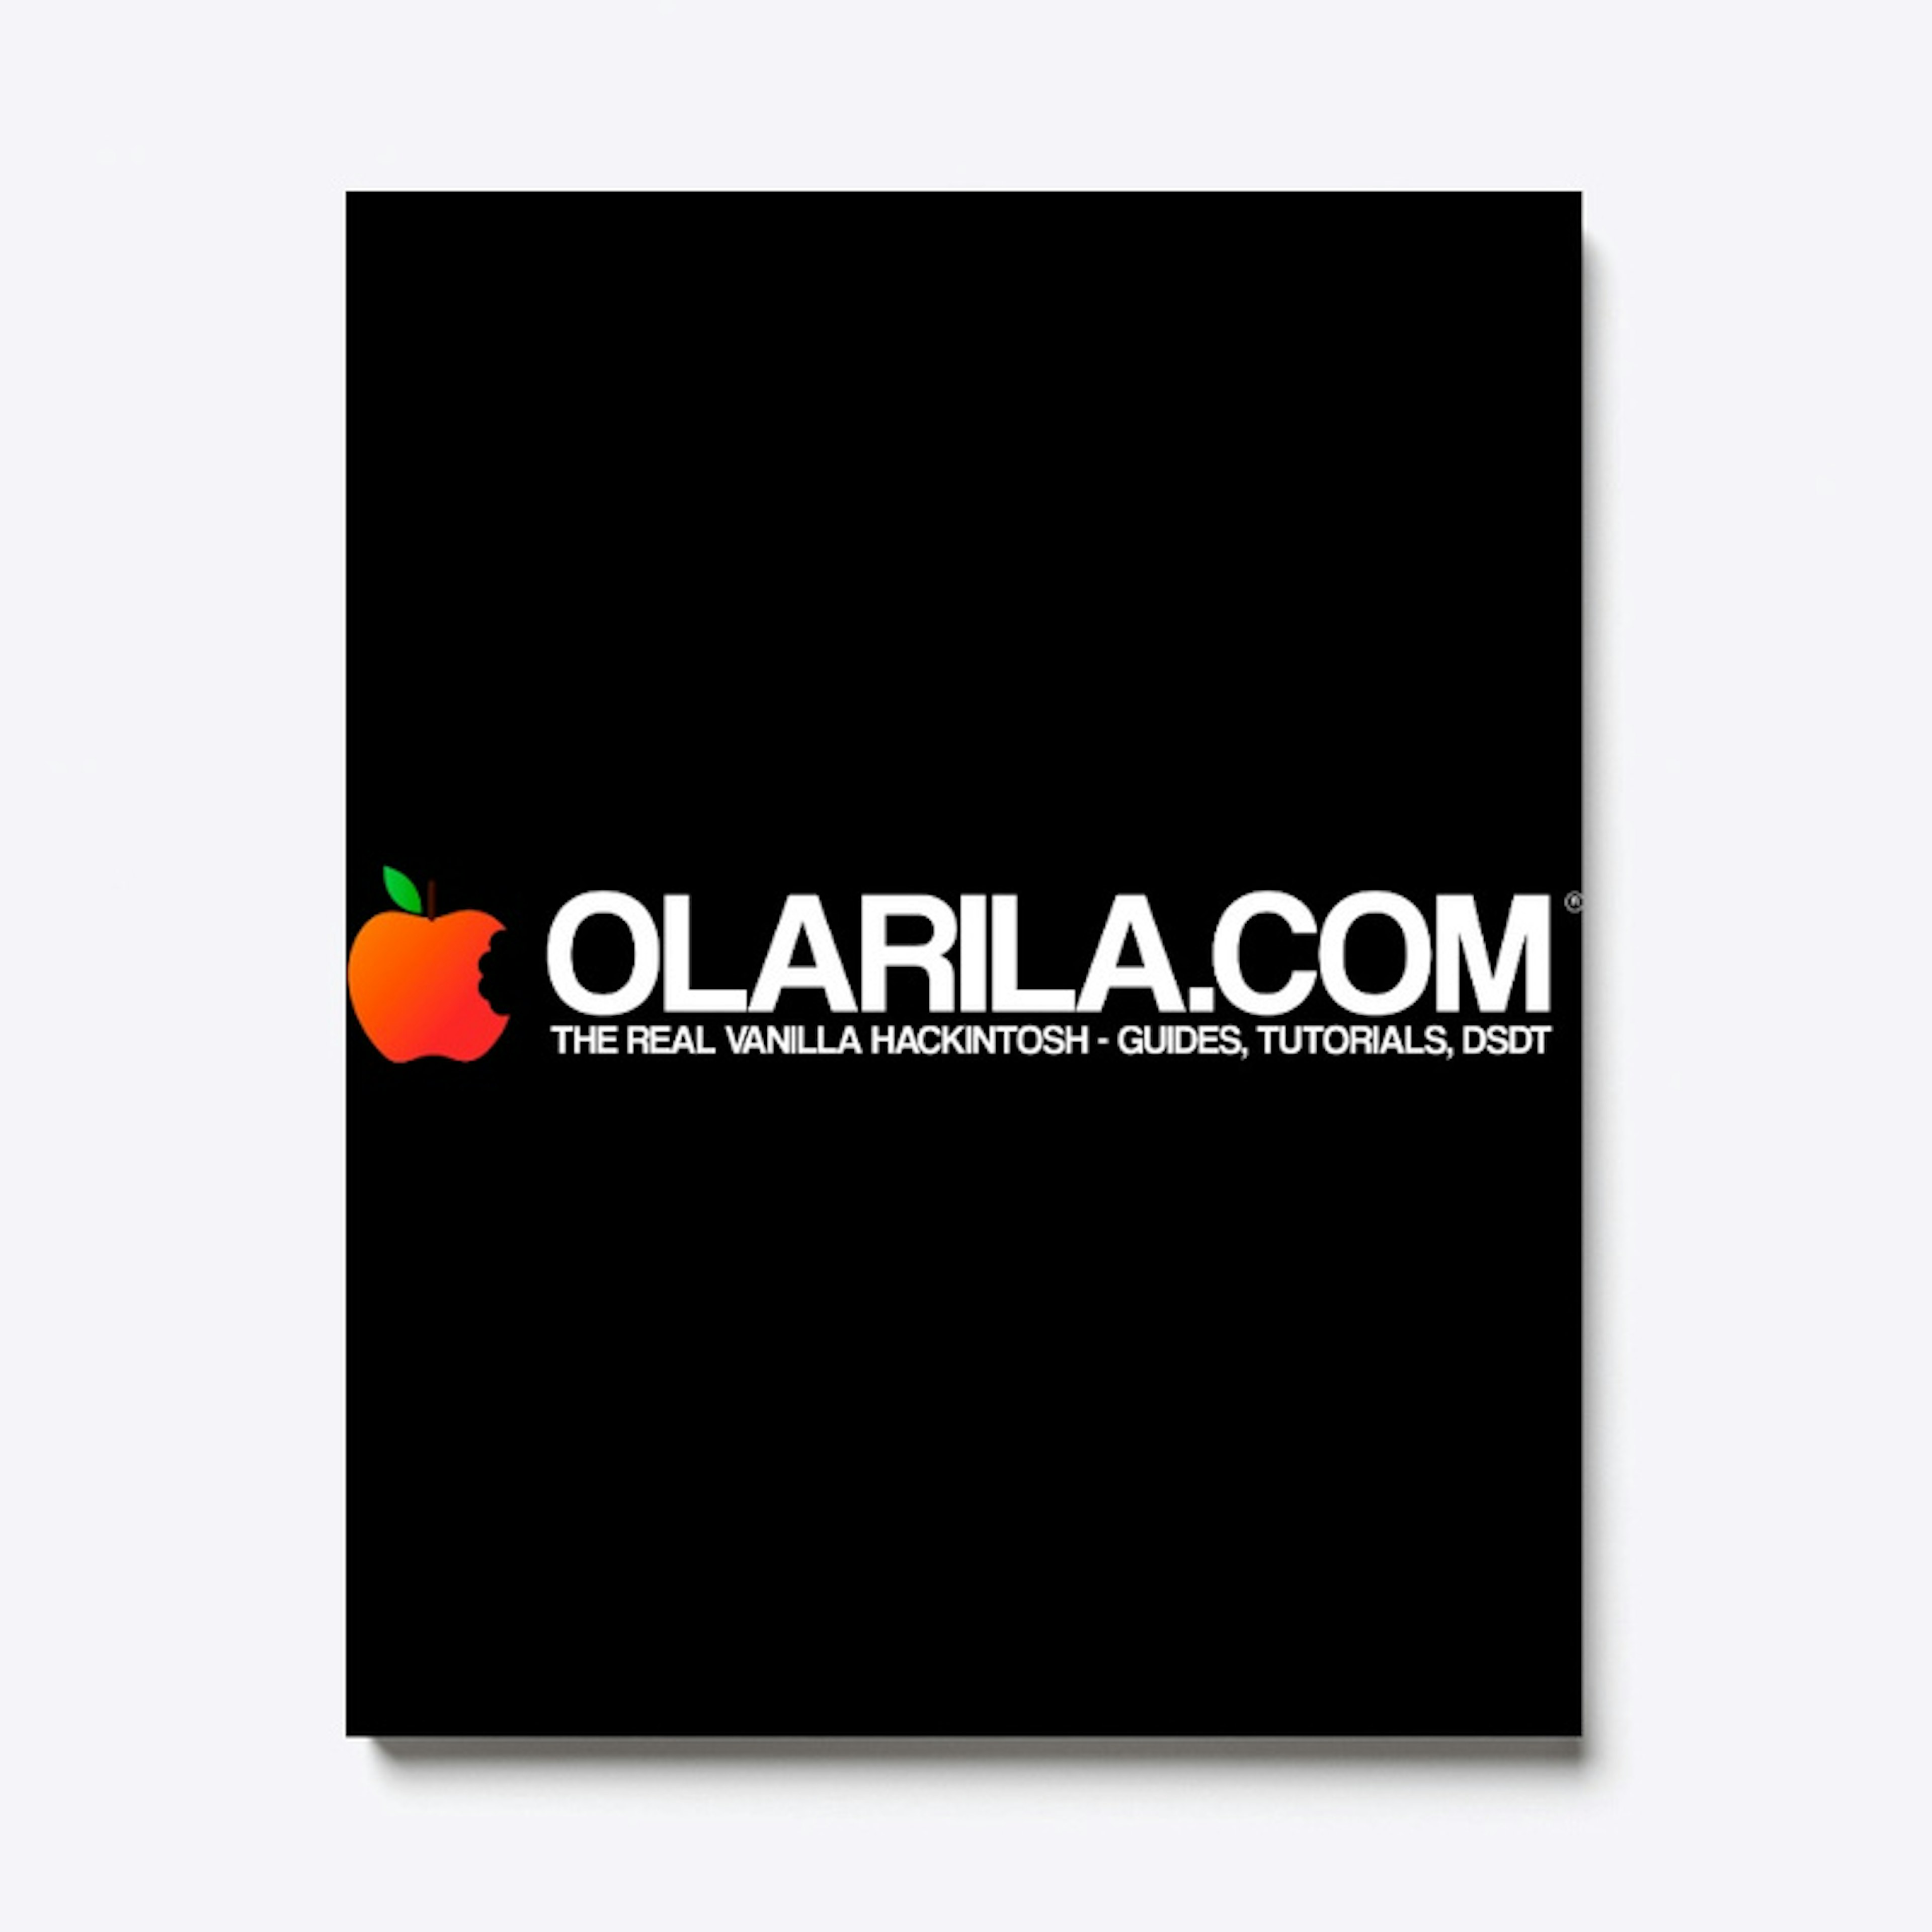 Olarila.com